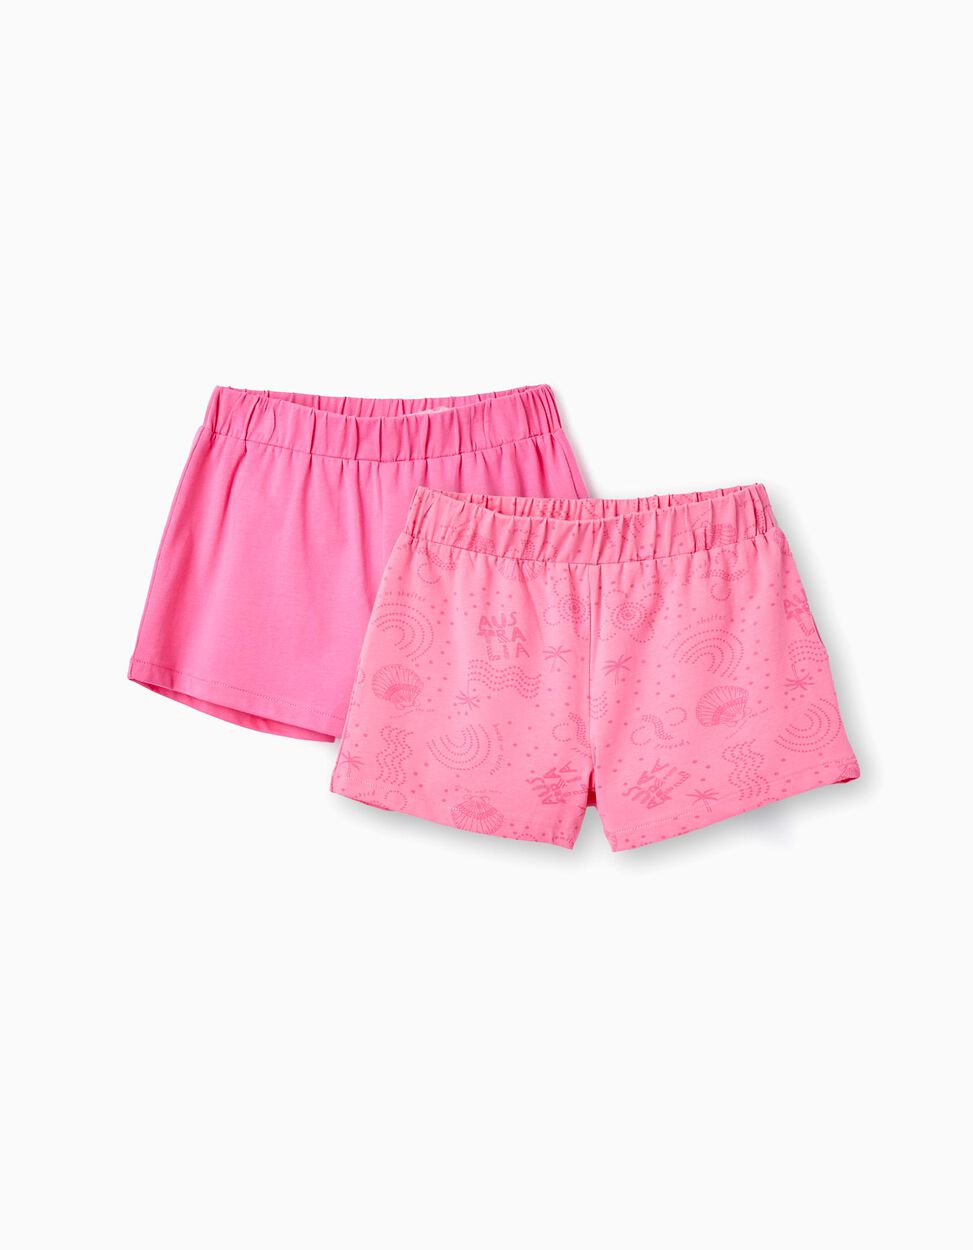 Buy Online 2 Cotton Shorts for Girls 'Australia', Pink